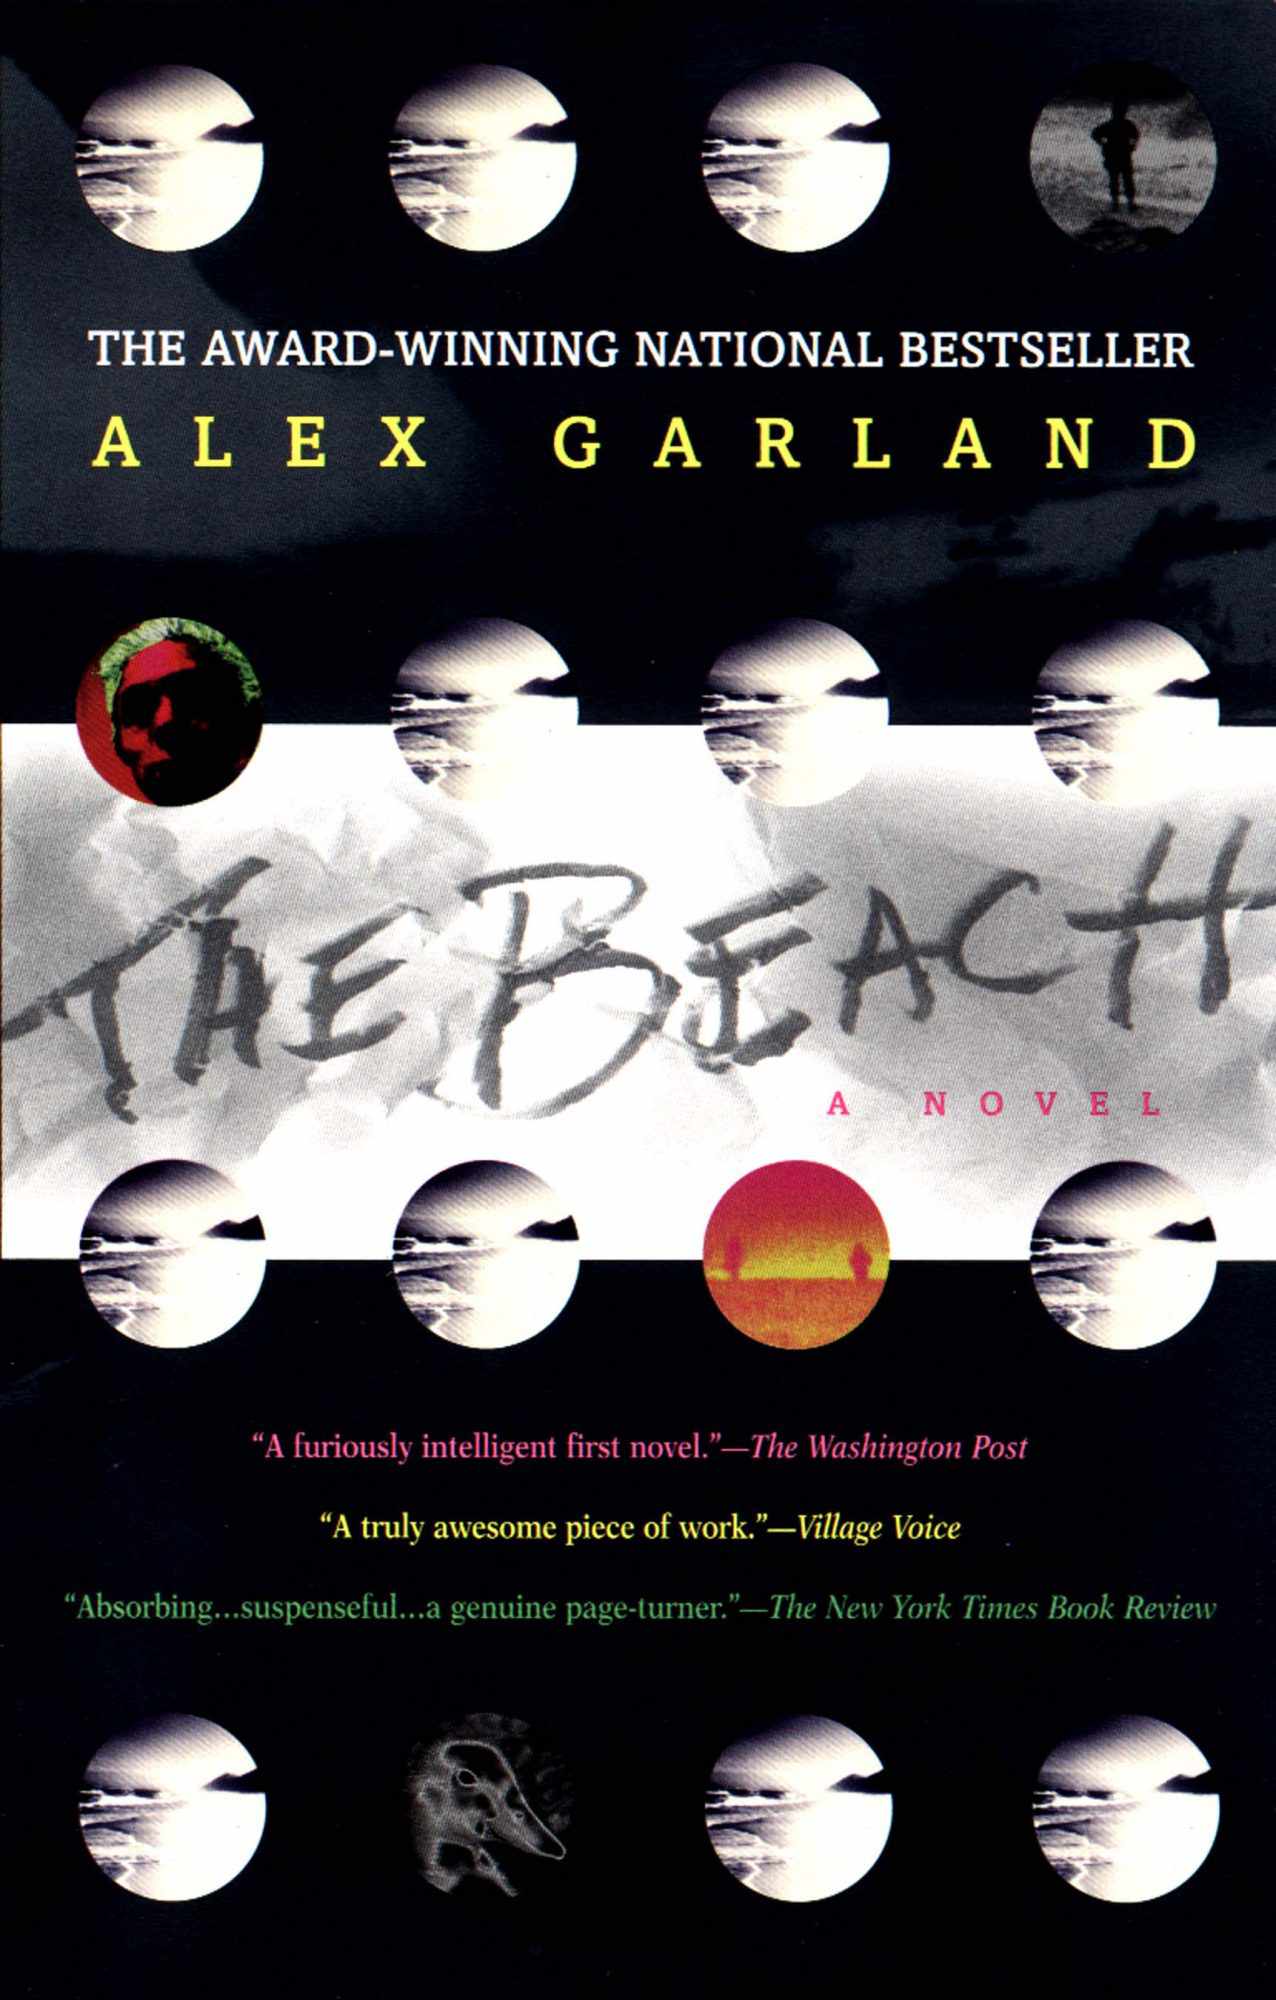 The Beach, by Alex Garland